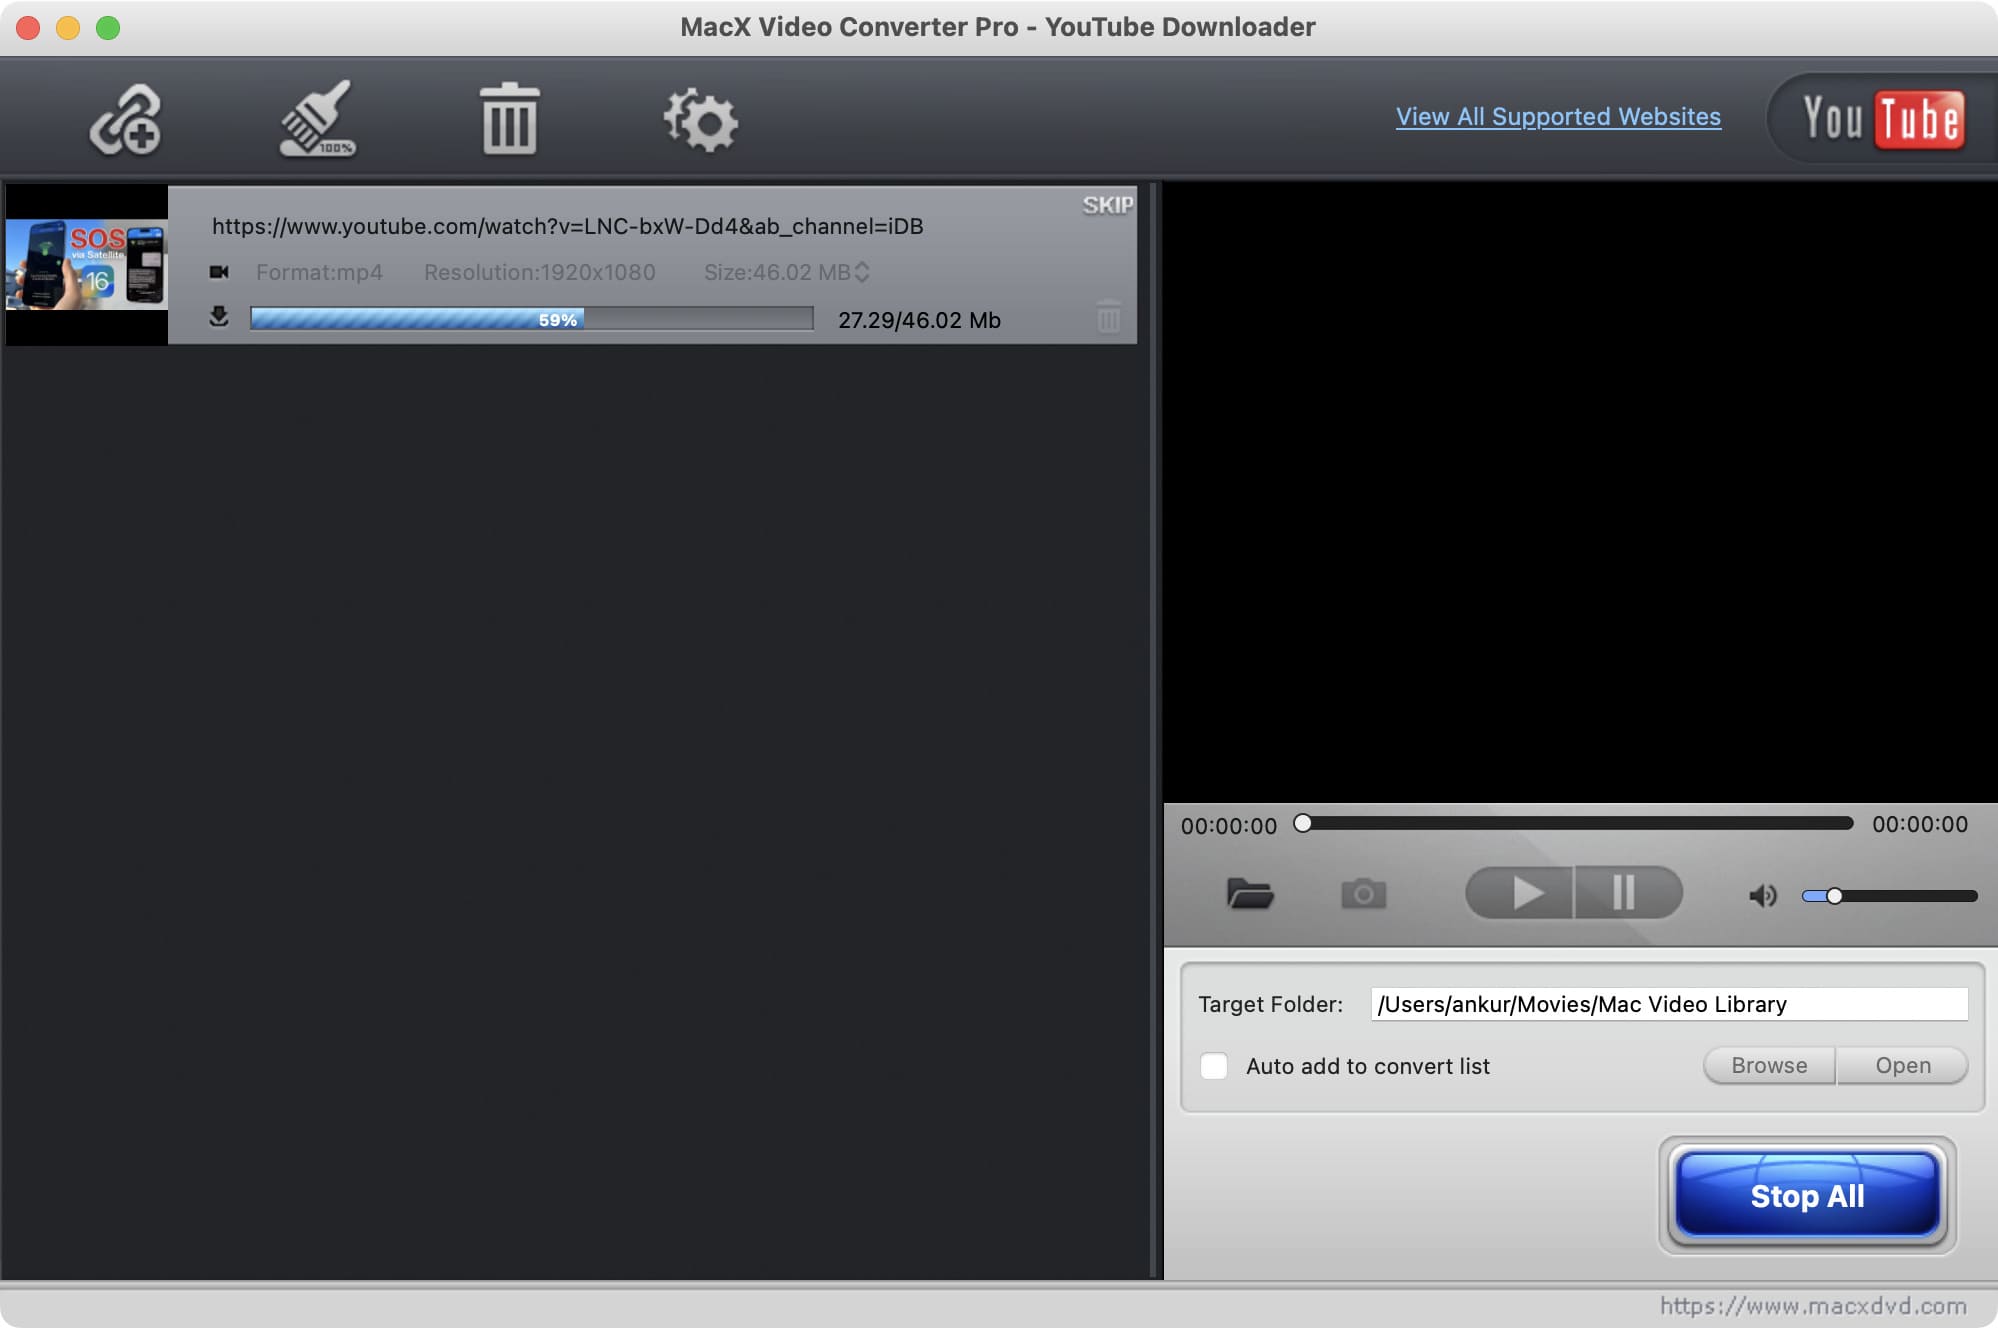 Downloading web videos using MacX Video Converter Pro